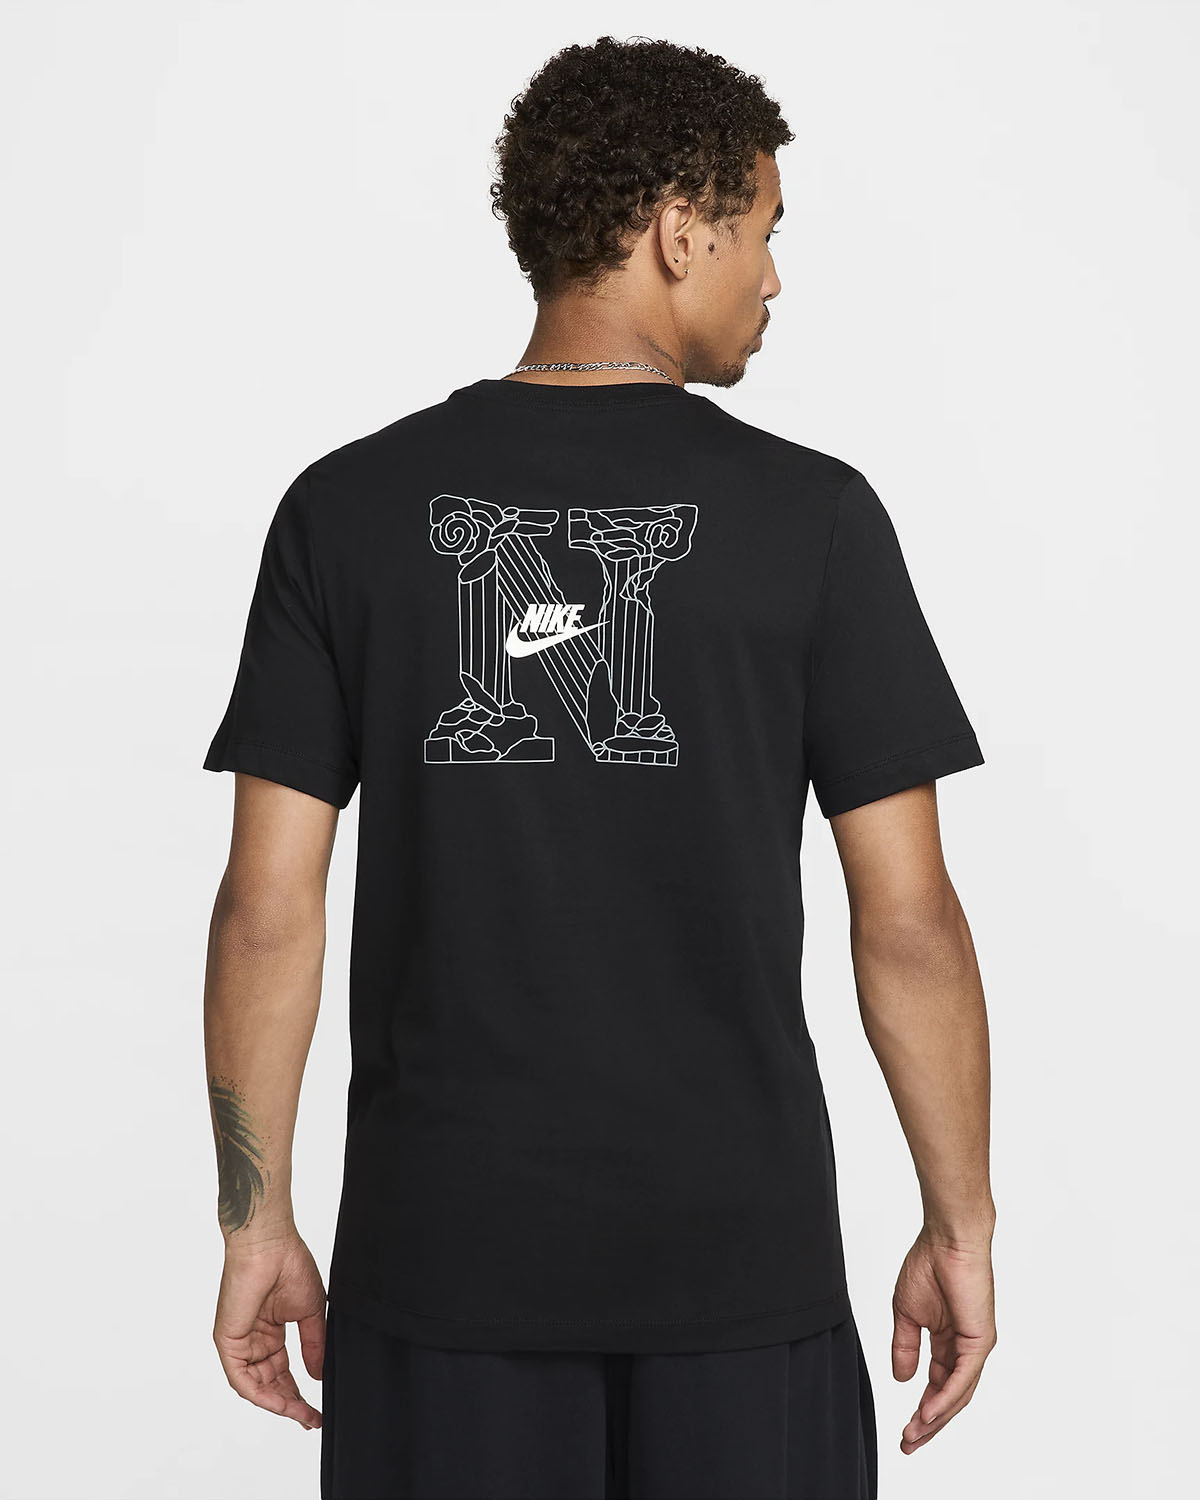 Nike Sportswear T Shirt Black White 2